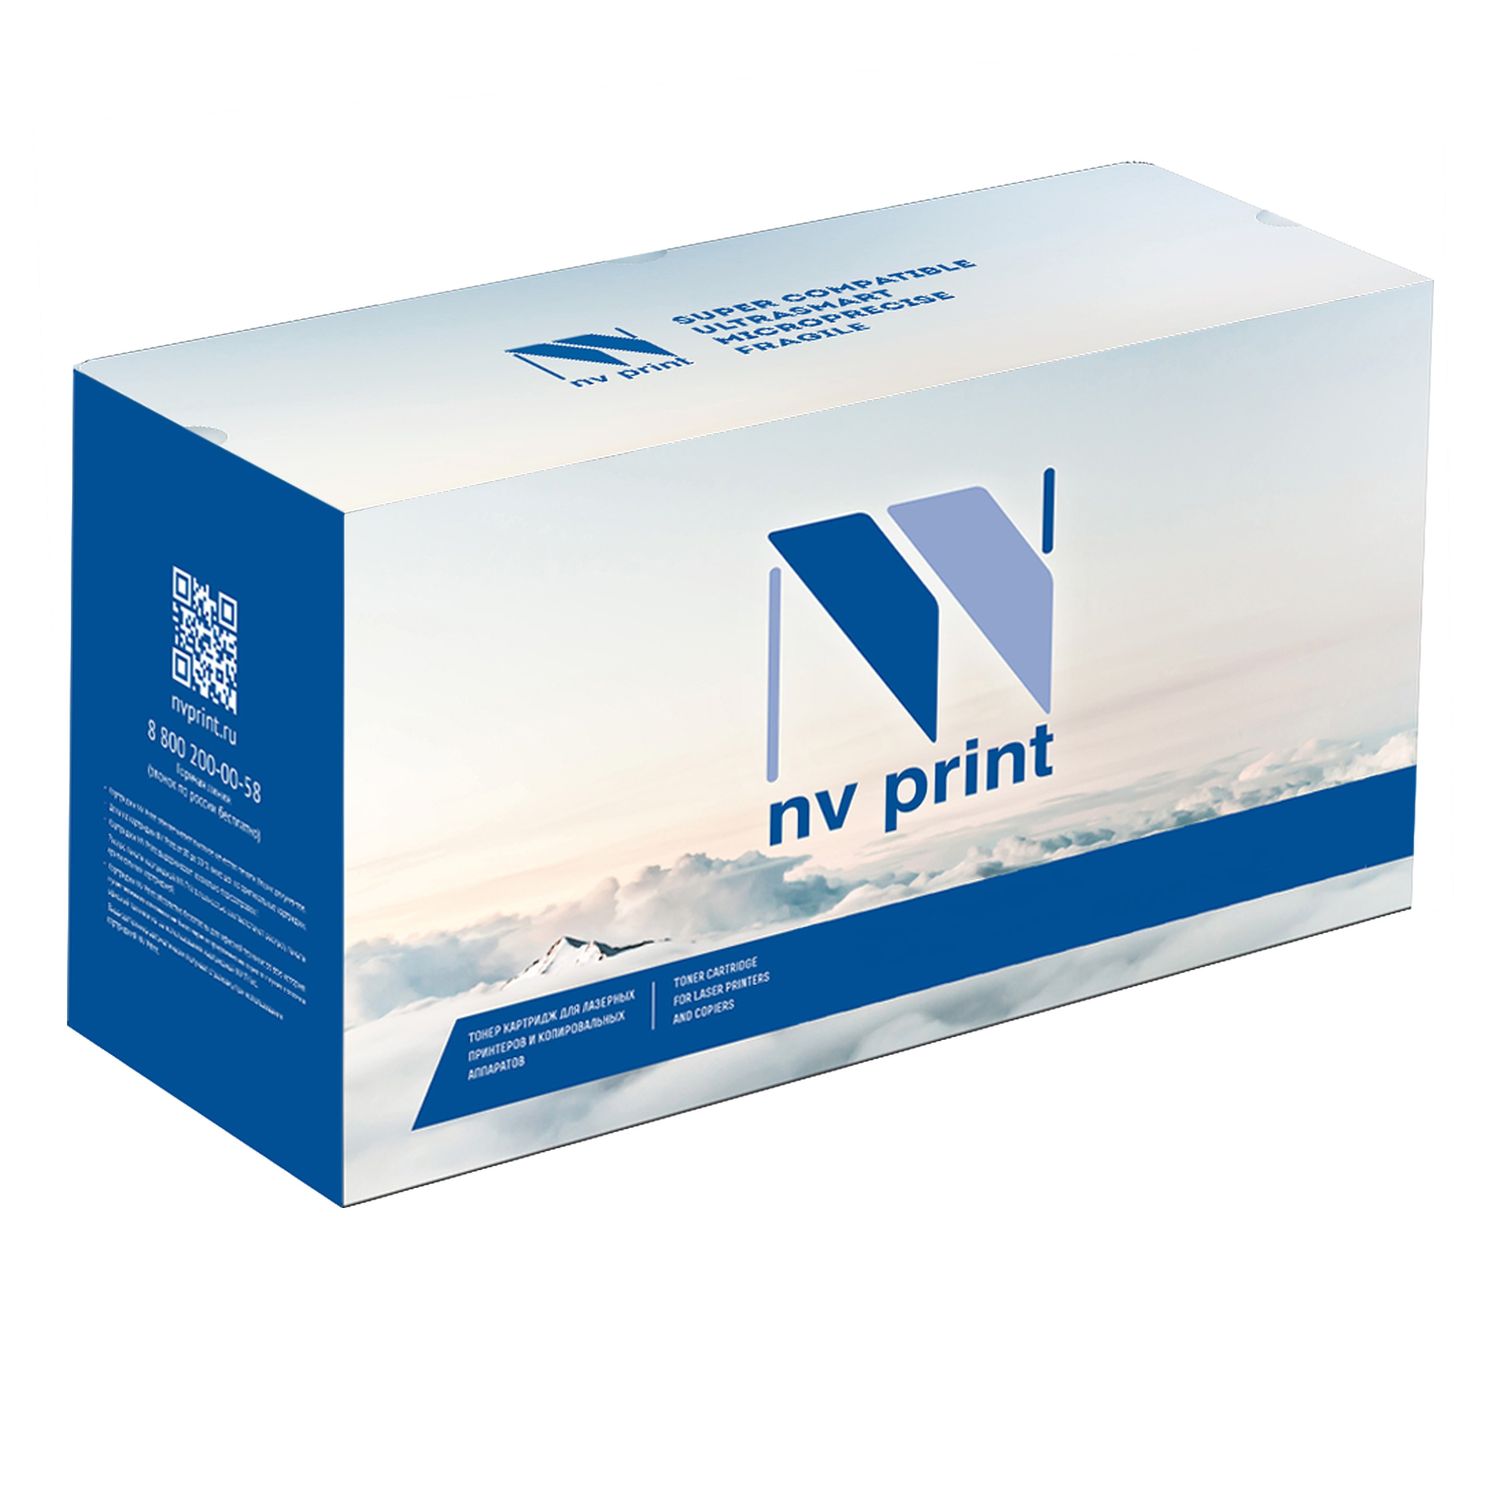 Картридж NV Print CE285Х для HP LJ P1102/ P1120/ M1132/ M1212/ M1214 тонер картридж nv print ce285a для нewlett packard lj p1102 1120 m1132 m1212 1600k